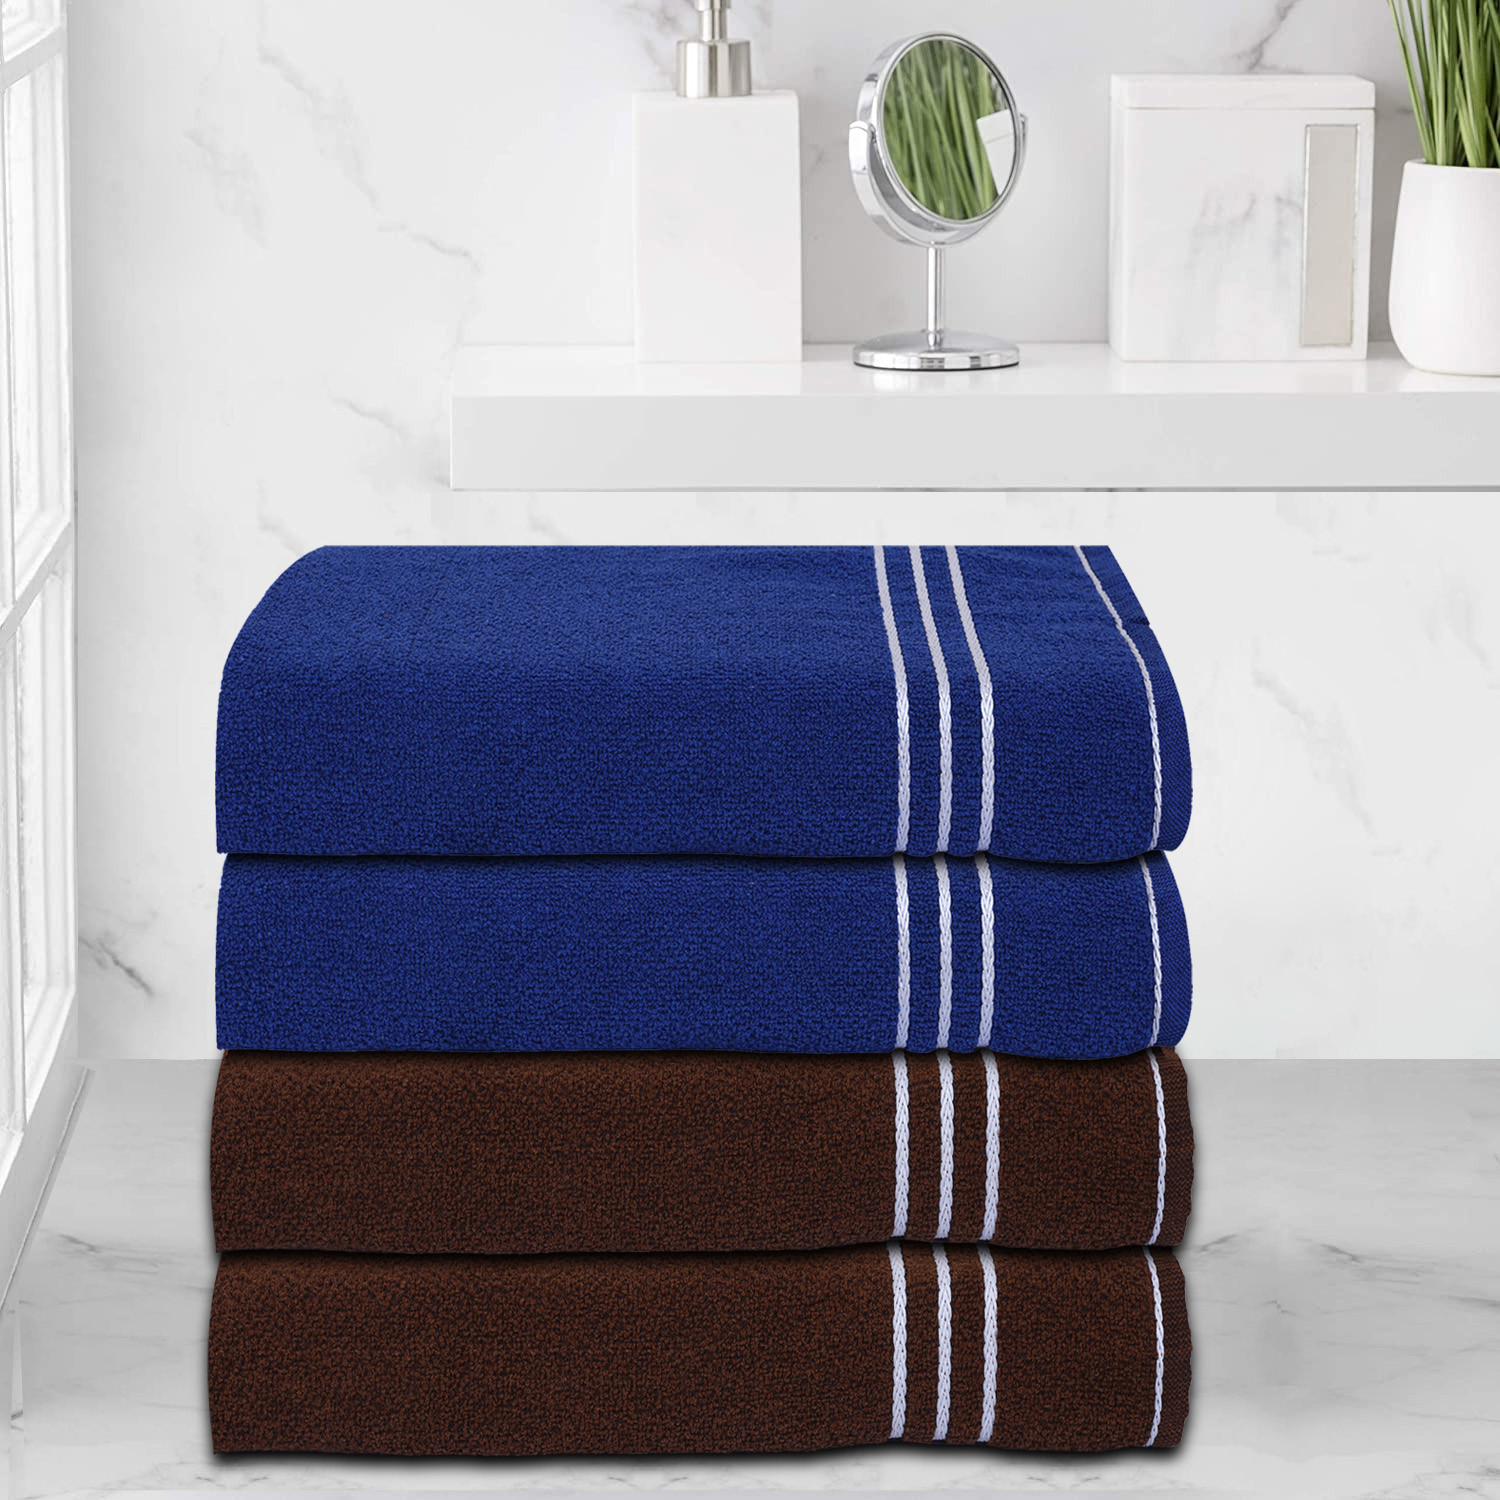 Kuber Industries Three Stripes Design Super Absorbent Cotton Hand Towel|Face Towel for Men,Women & Kids Brown & Blue)